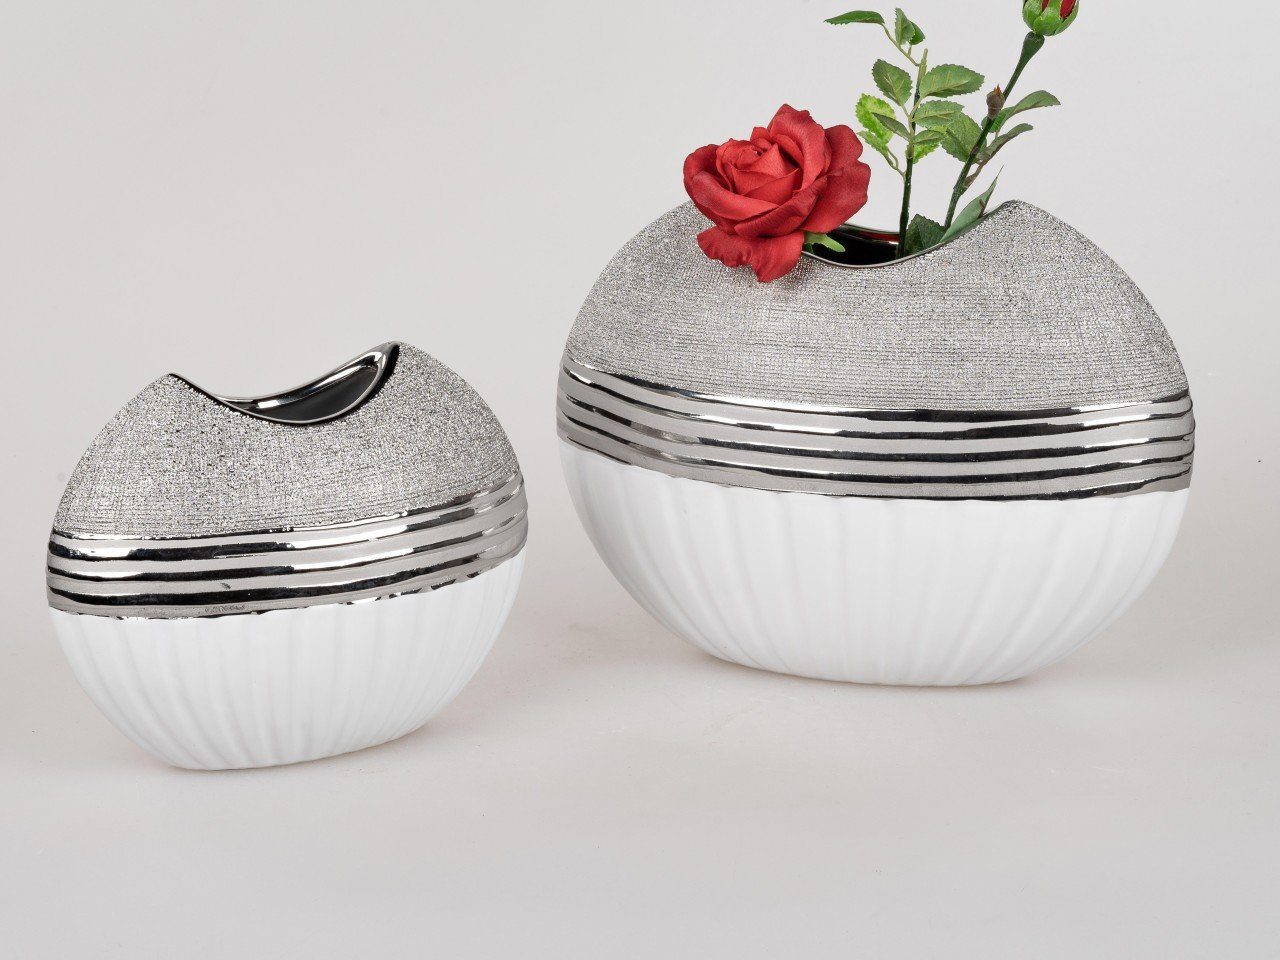 Keramik Small-Preis L:20cm Dekovase formano B:10cm White Silber Silver, H:17cm